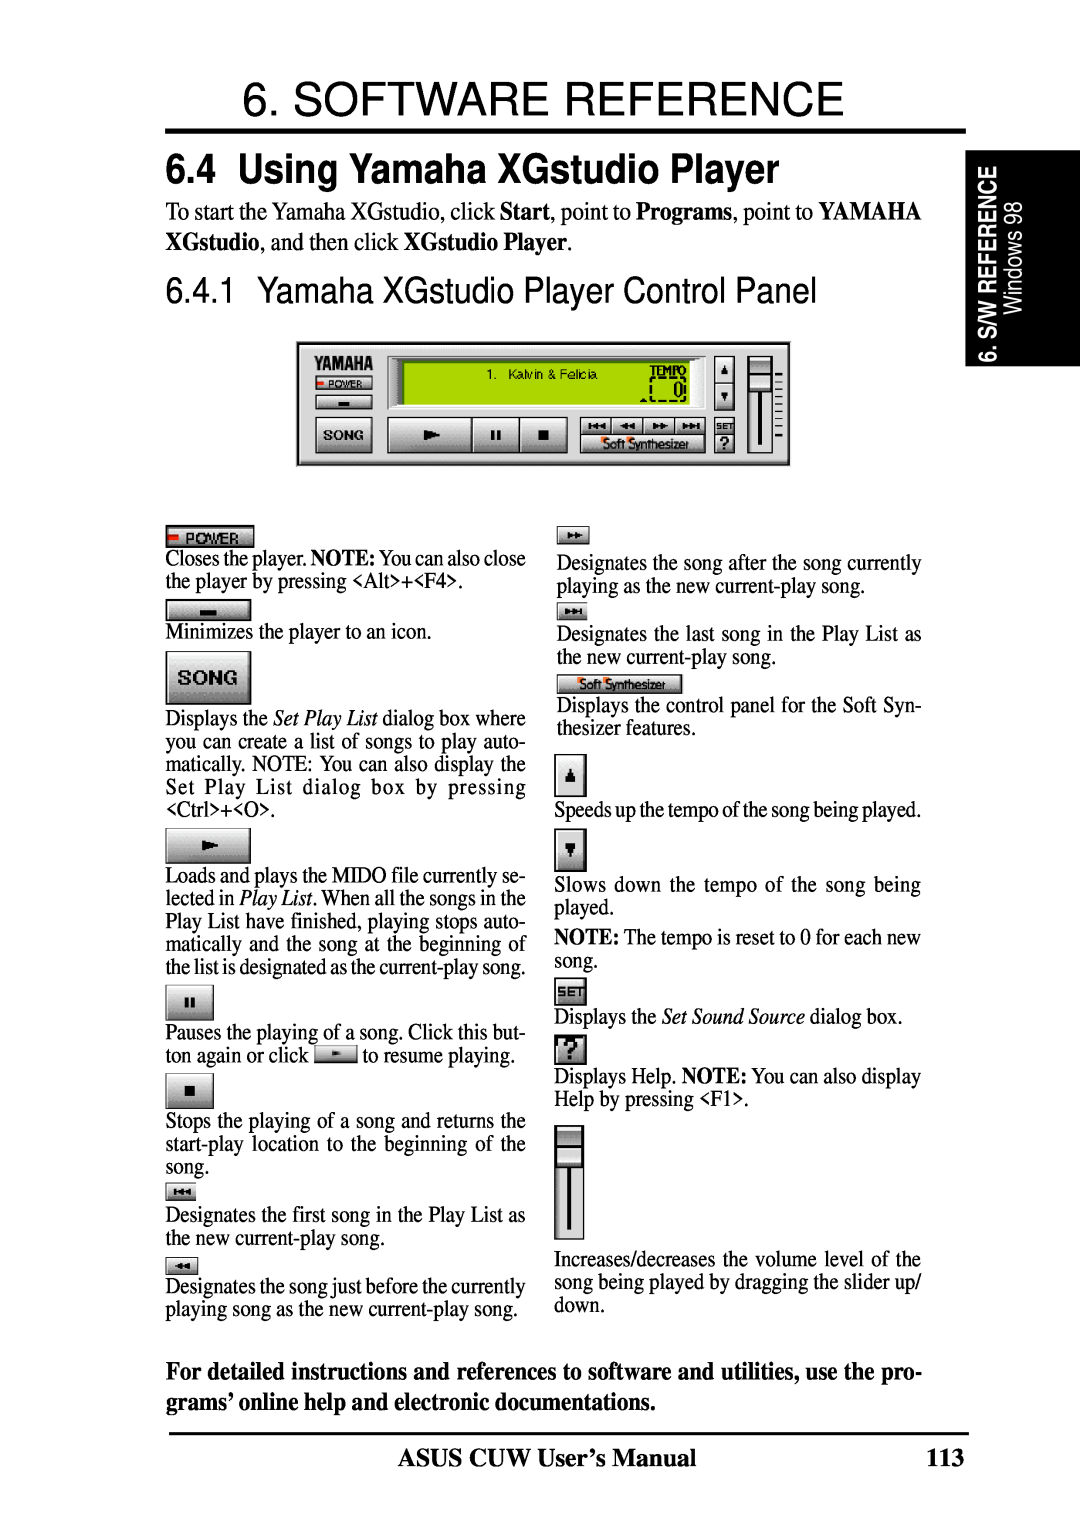 Asus 810 Using Yamaha XGstudio Player, Yamaha XGstudio Player Control Panel, XGstudio, and then click XGstudio Player 